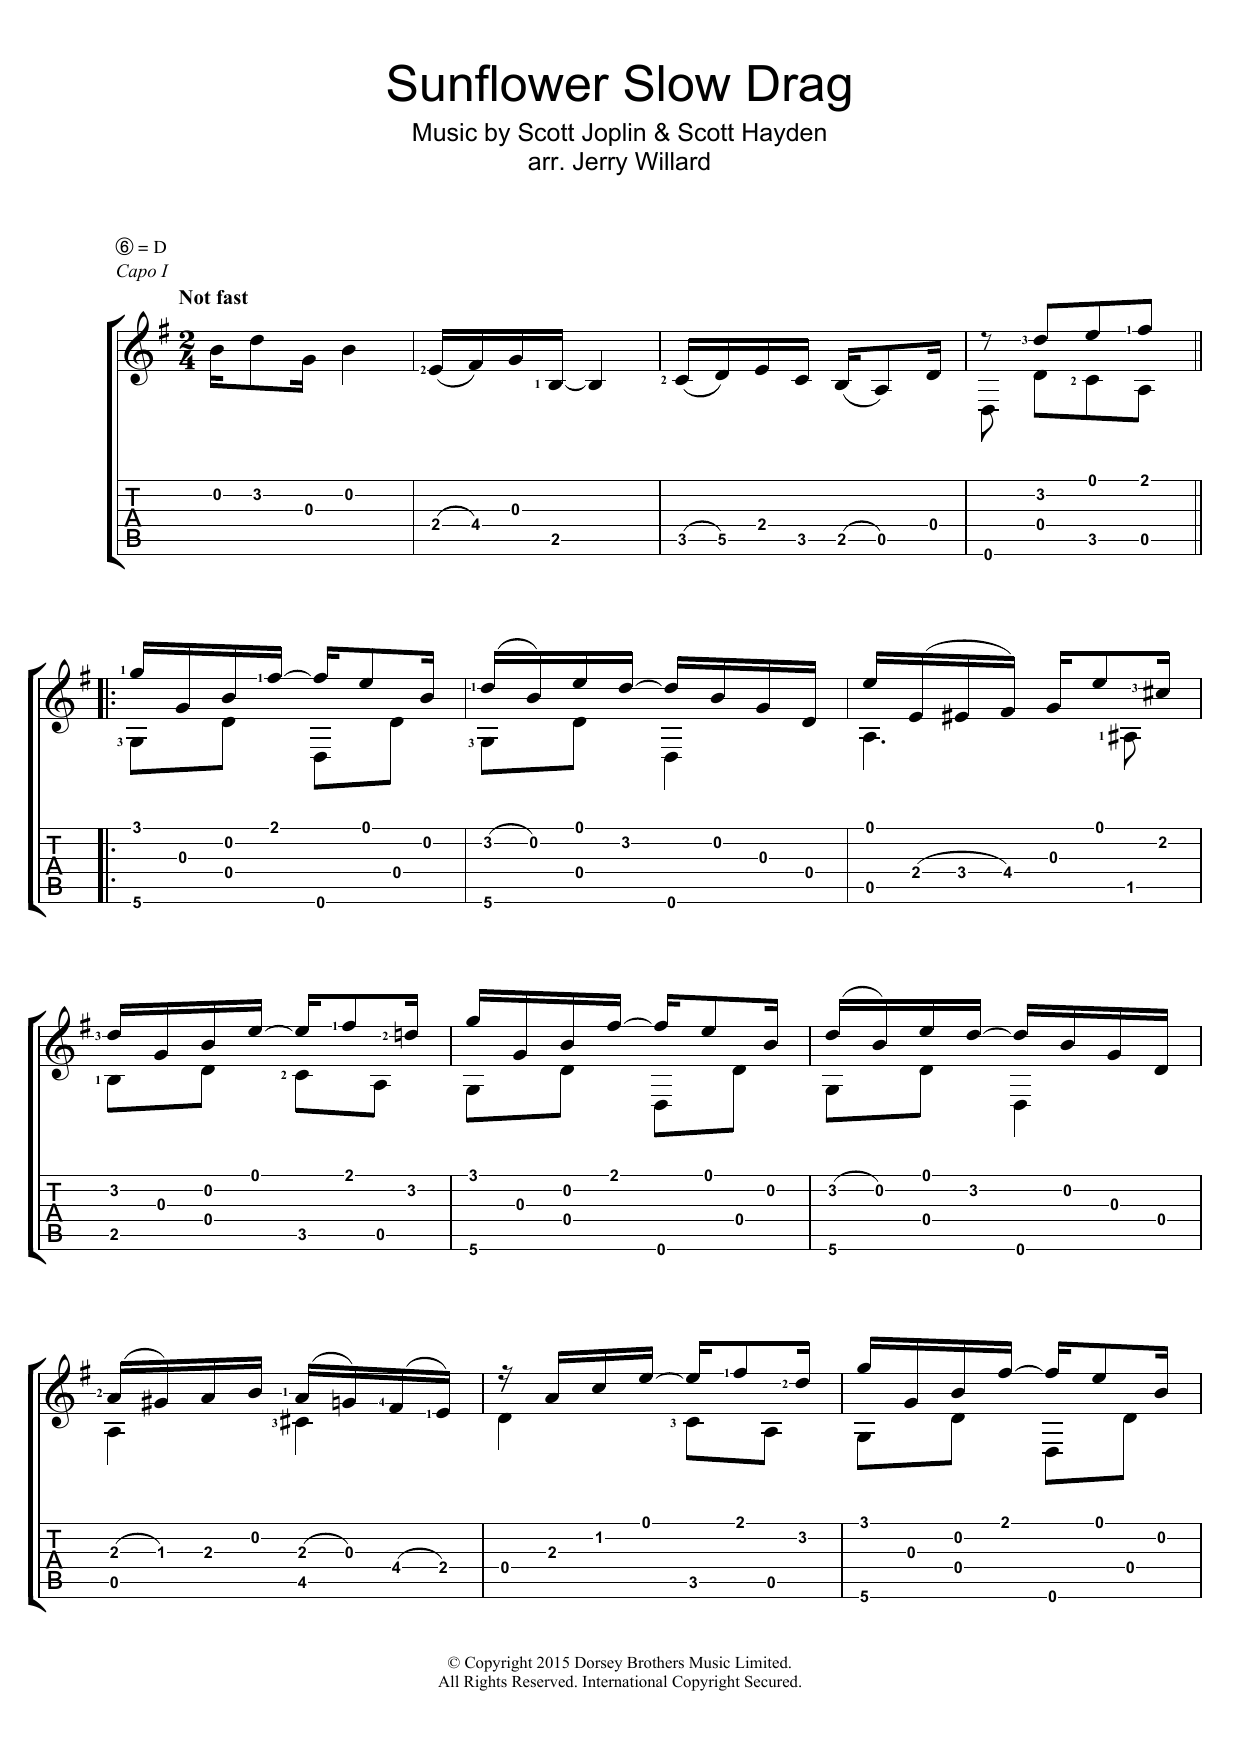 Scott Joplin Sunflower Slow Drag Sheet Music Notes & Chords for Guitar Tab - Download or Print PDF